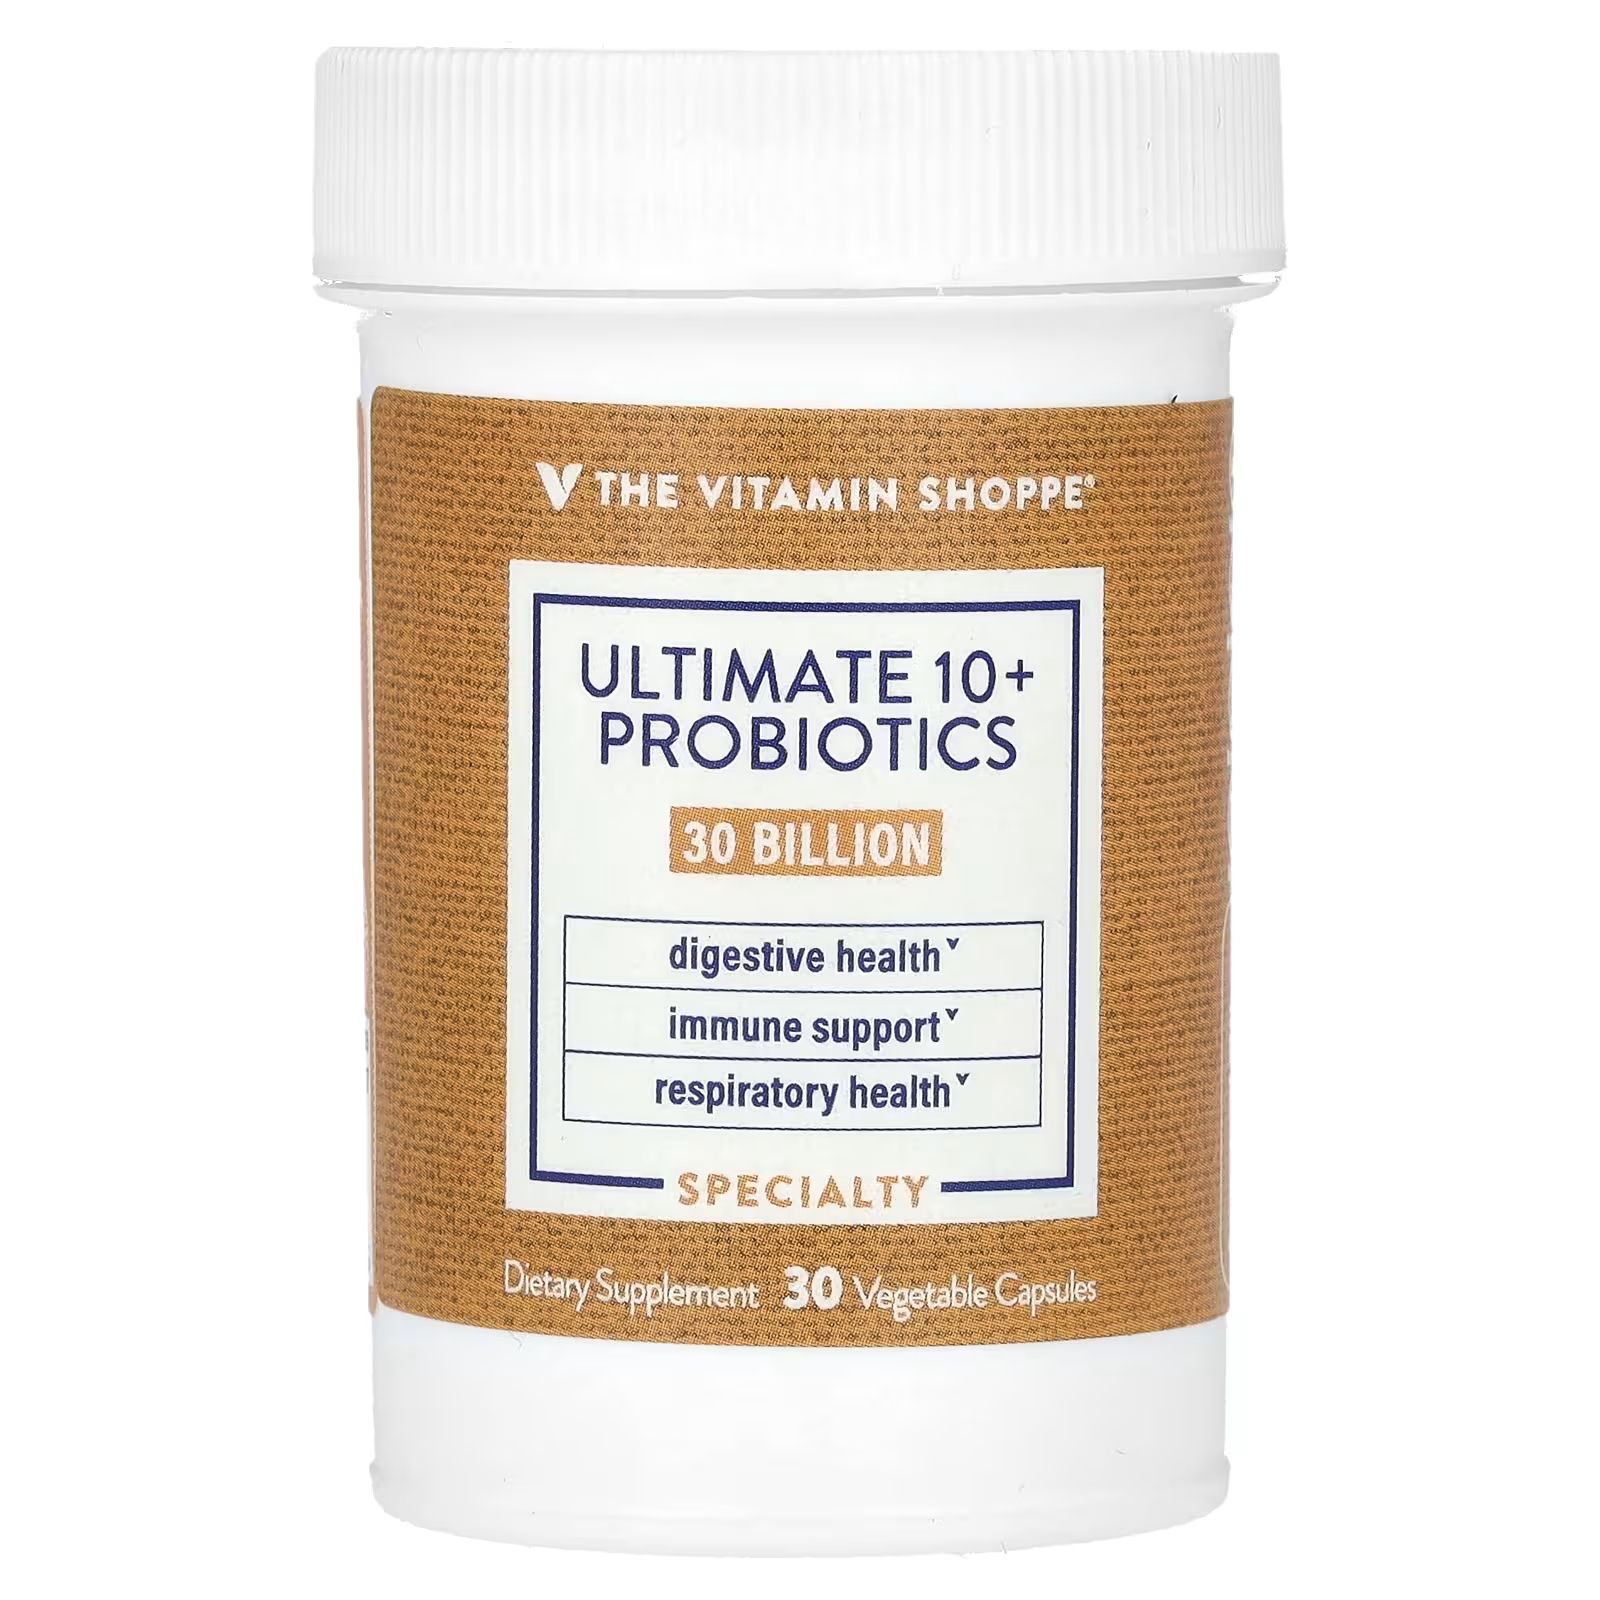 Пробиотик The Vitamin Shoppe Ultimate 10+ Probiotics 30 миллиардов КОЕ, 30 капсул ultimate 10 пробиотиков 30 миллиардов кое 60 растительных капсул the vitamin shoppe